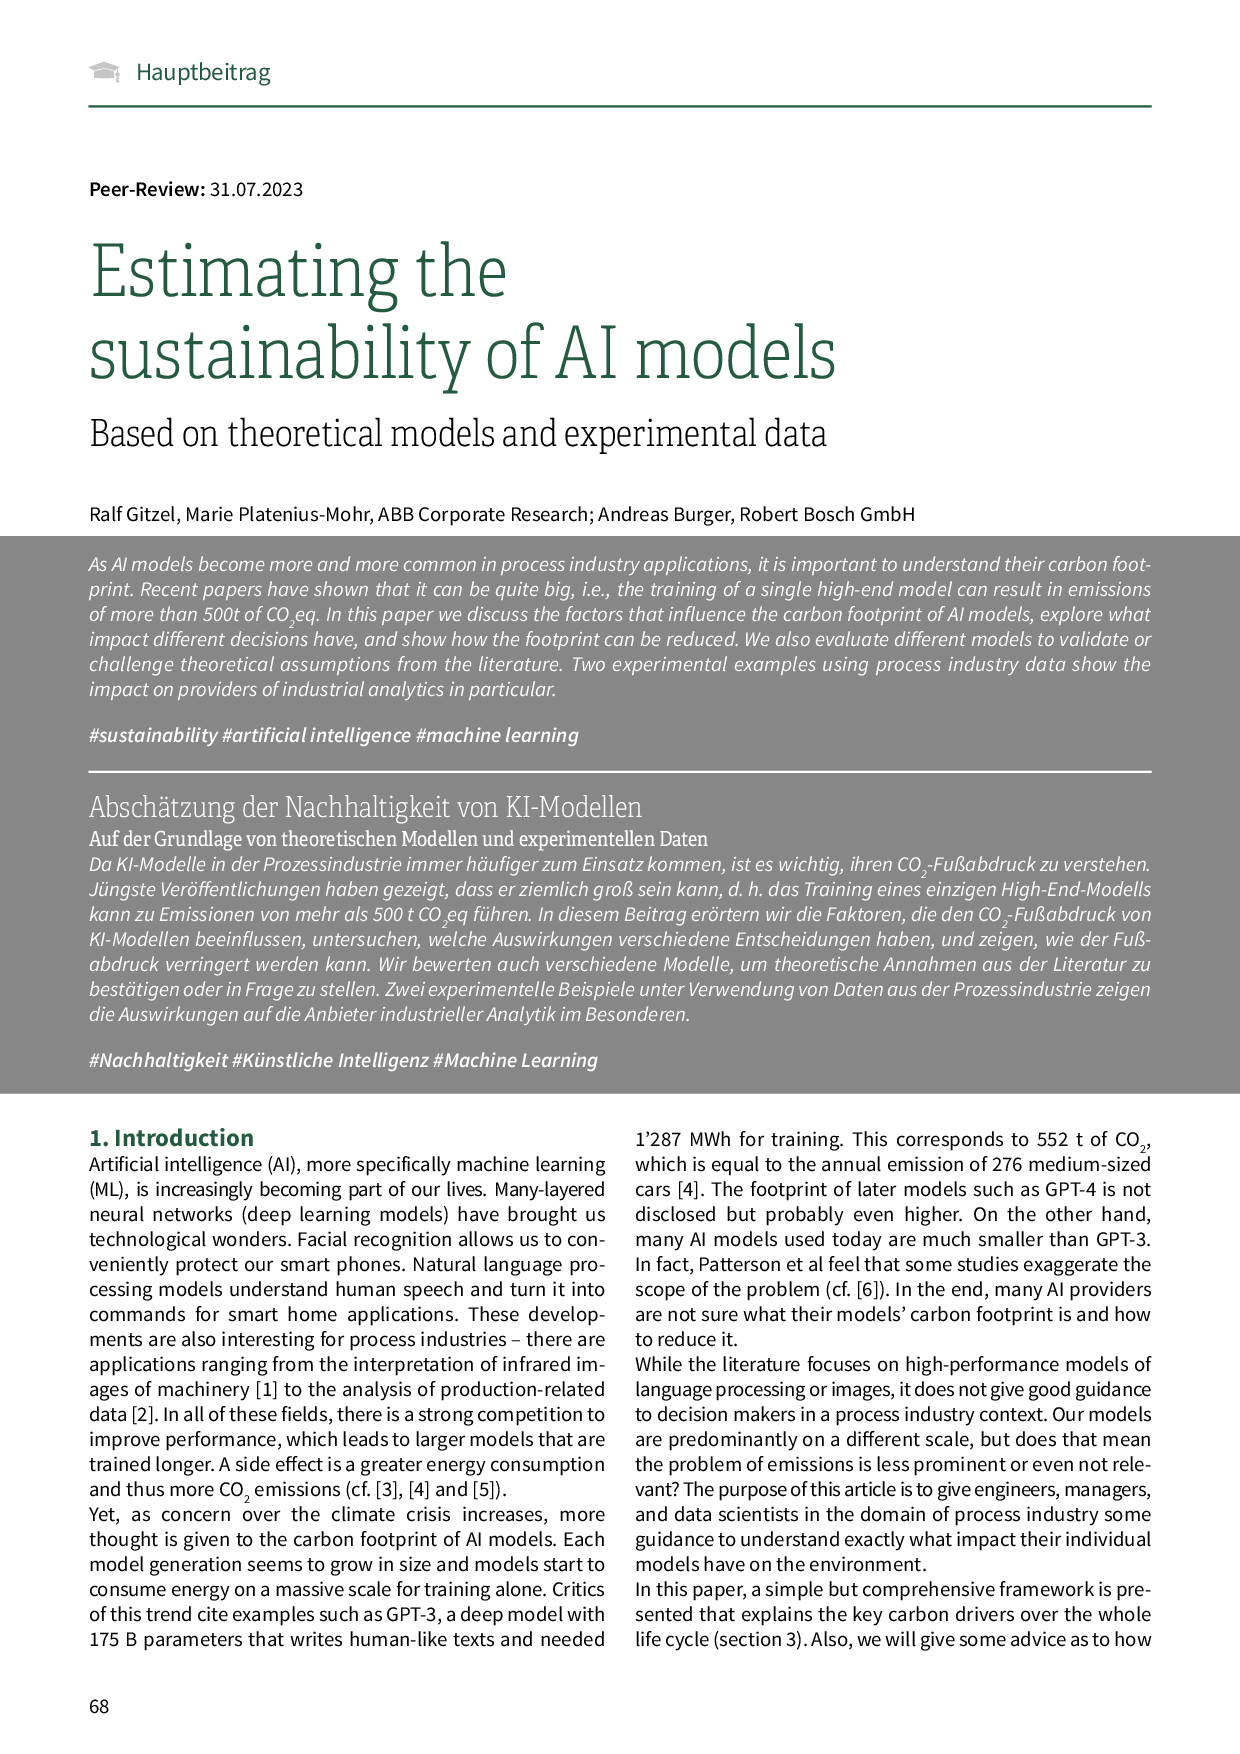 Estimating the sustainability of AI models